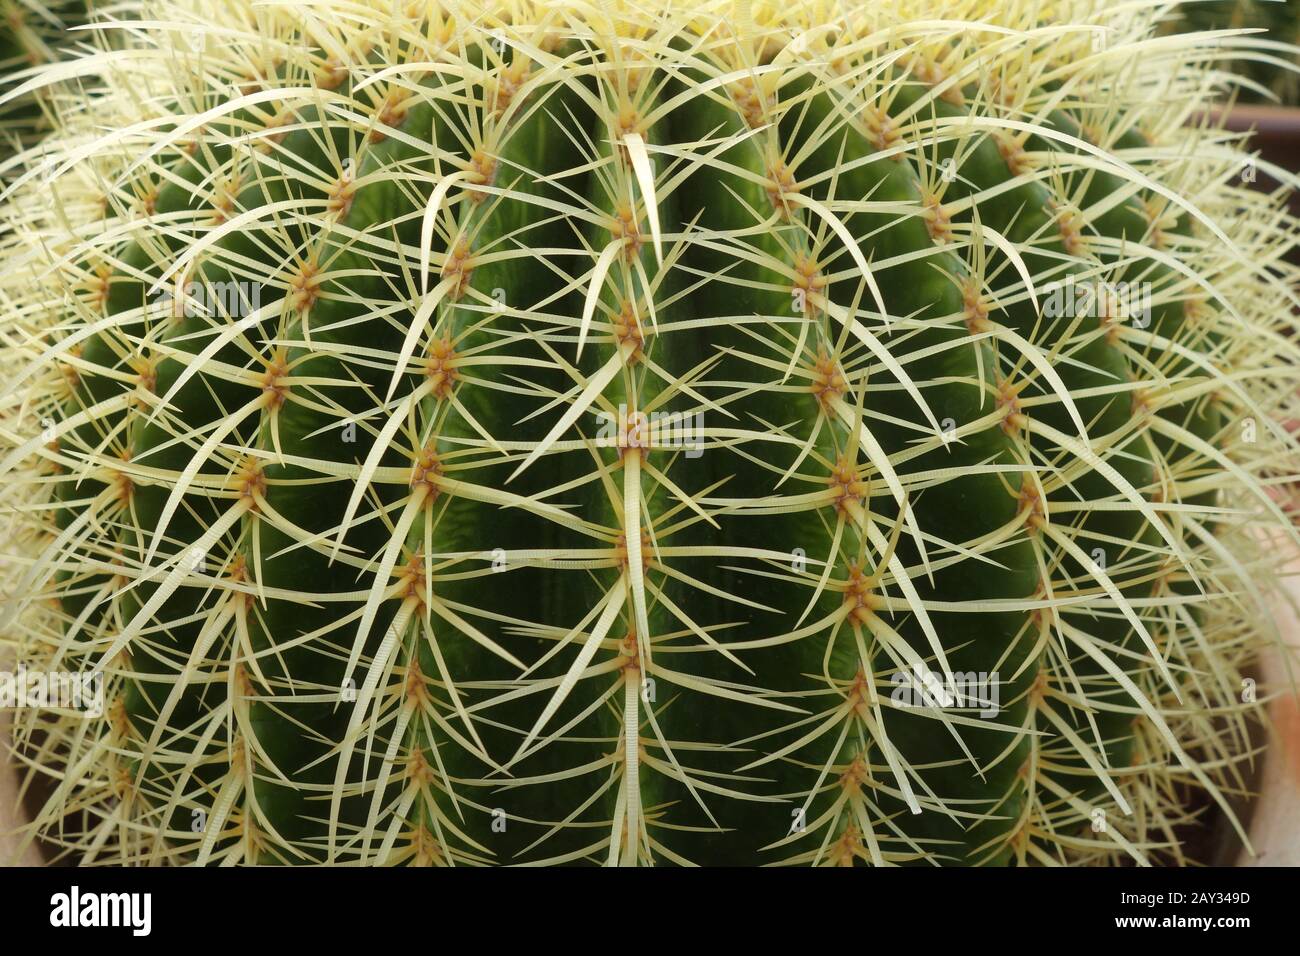 Round green cactus Stock Photo